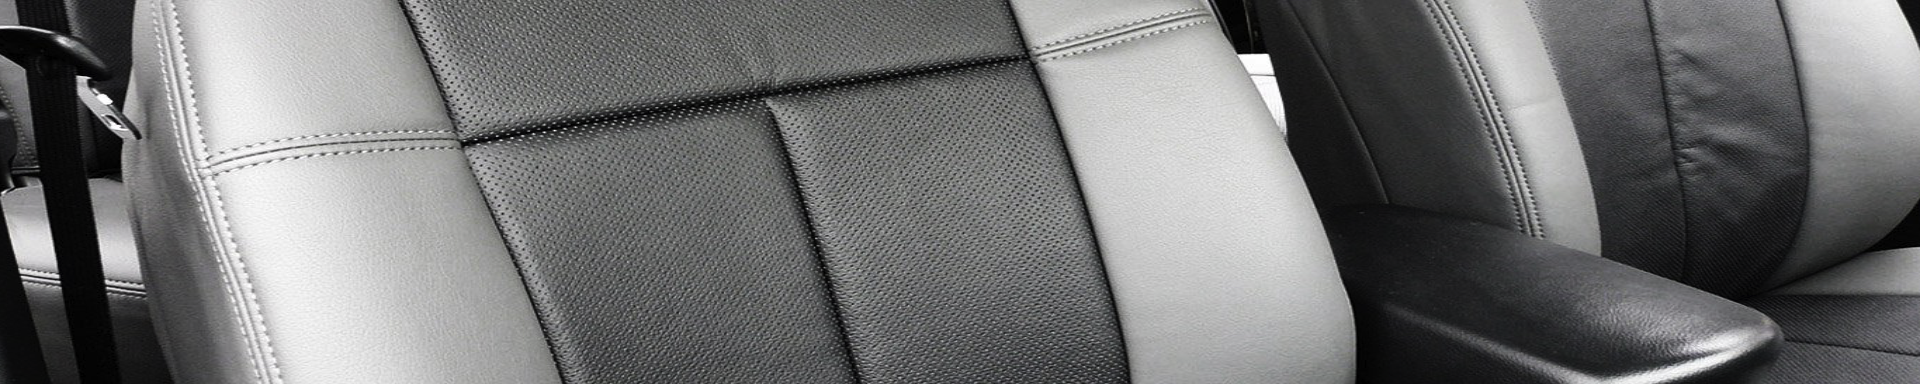 Leather Seat Covers | GarageAndFab.com | Munro Industries gf-100103051105